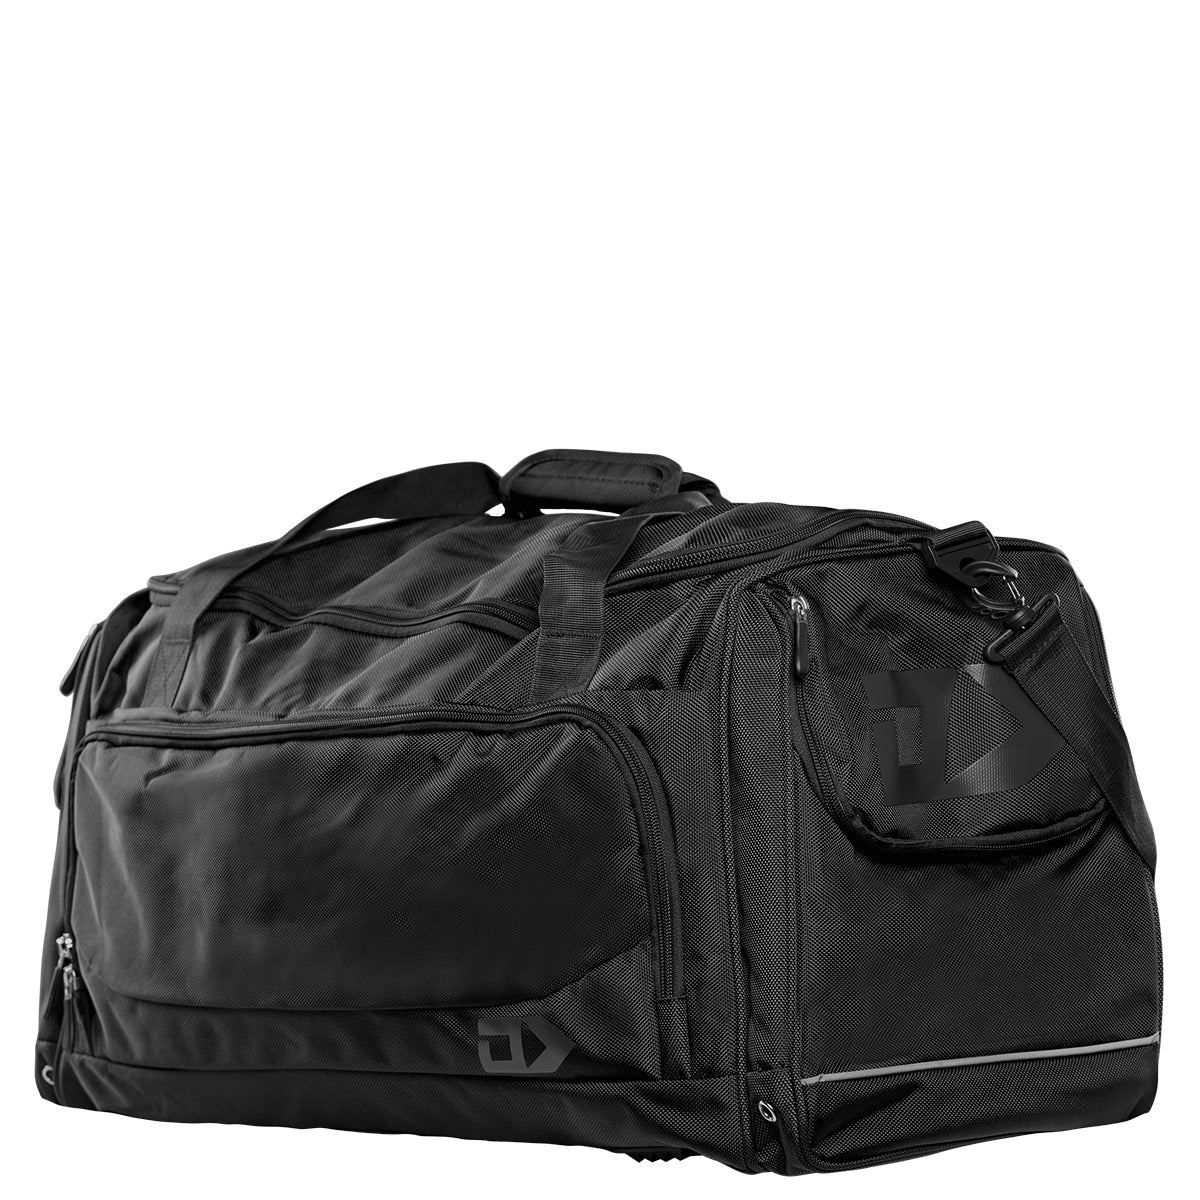 DS Black Gear Bag